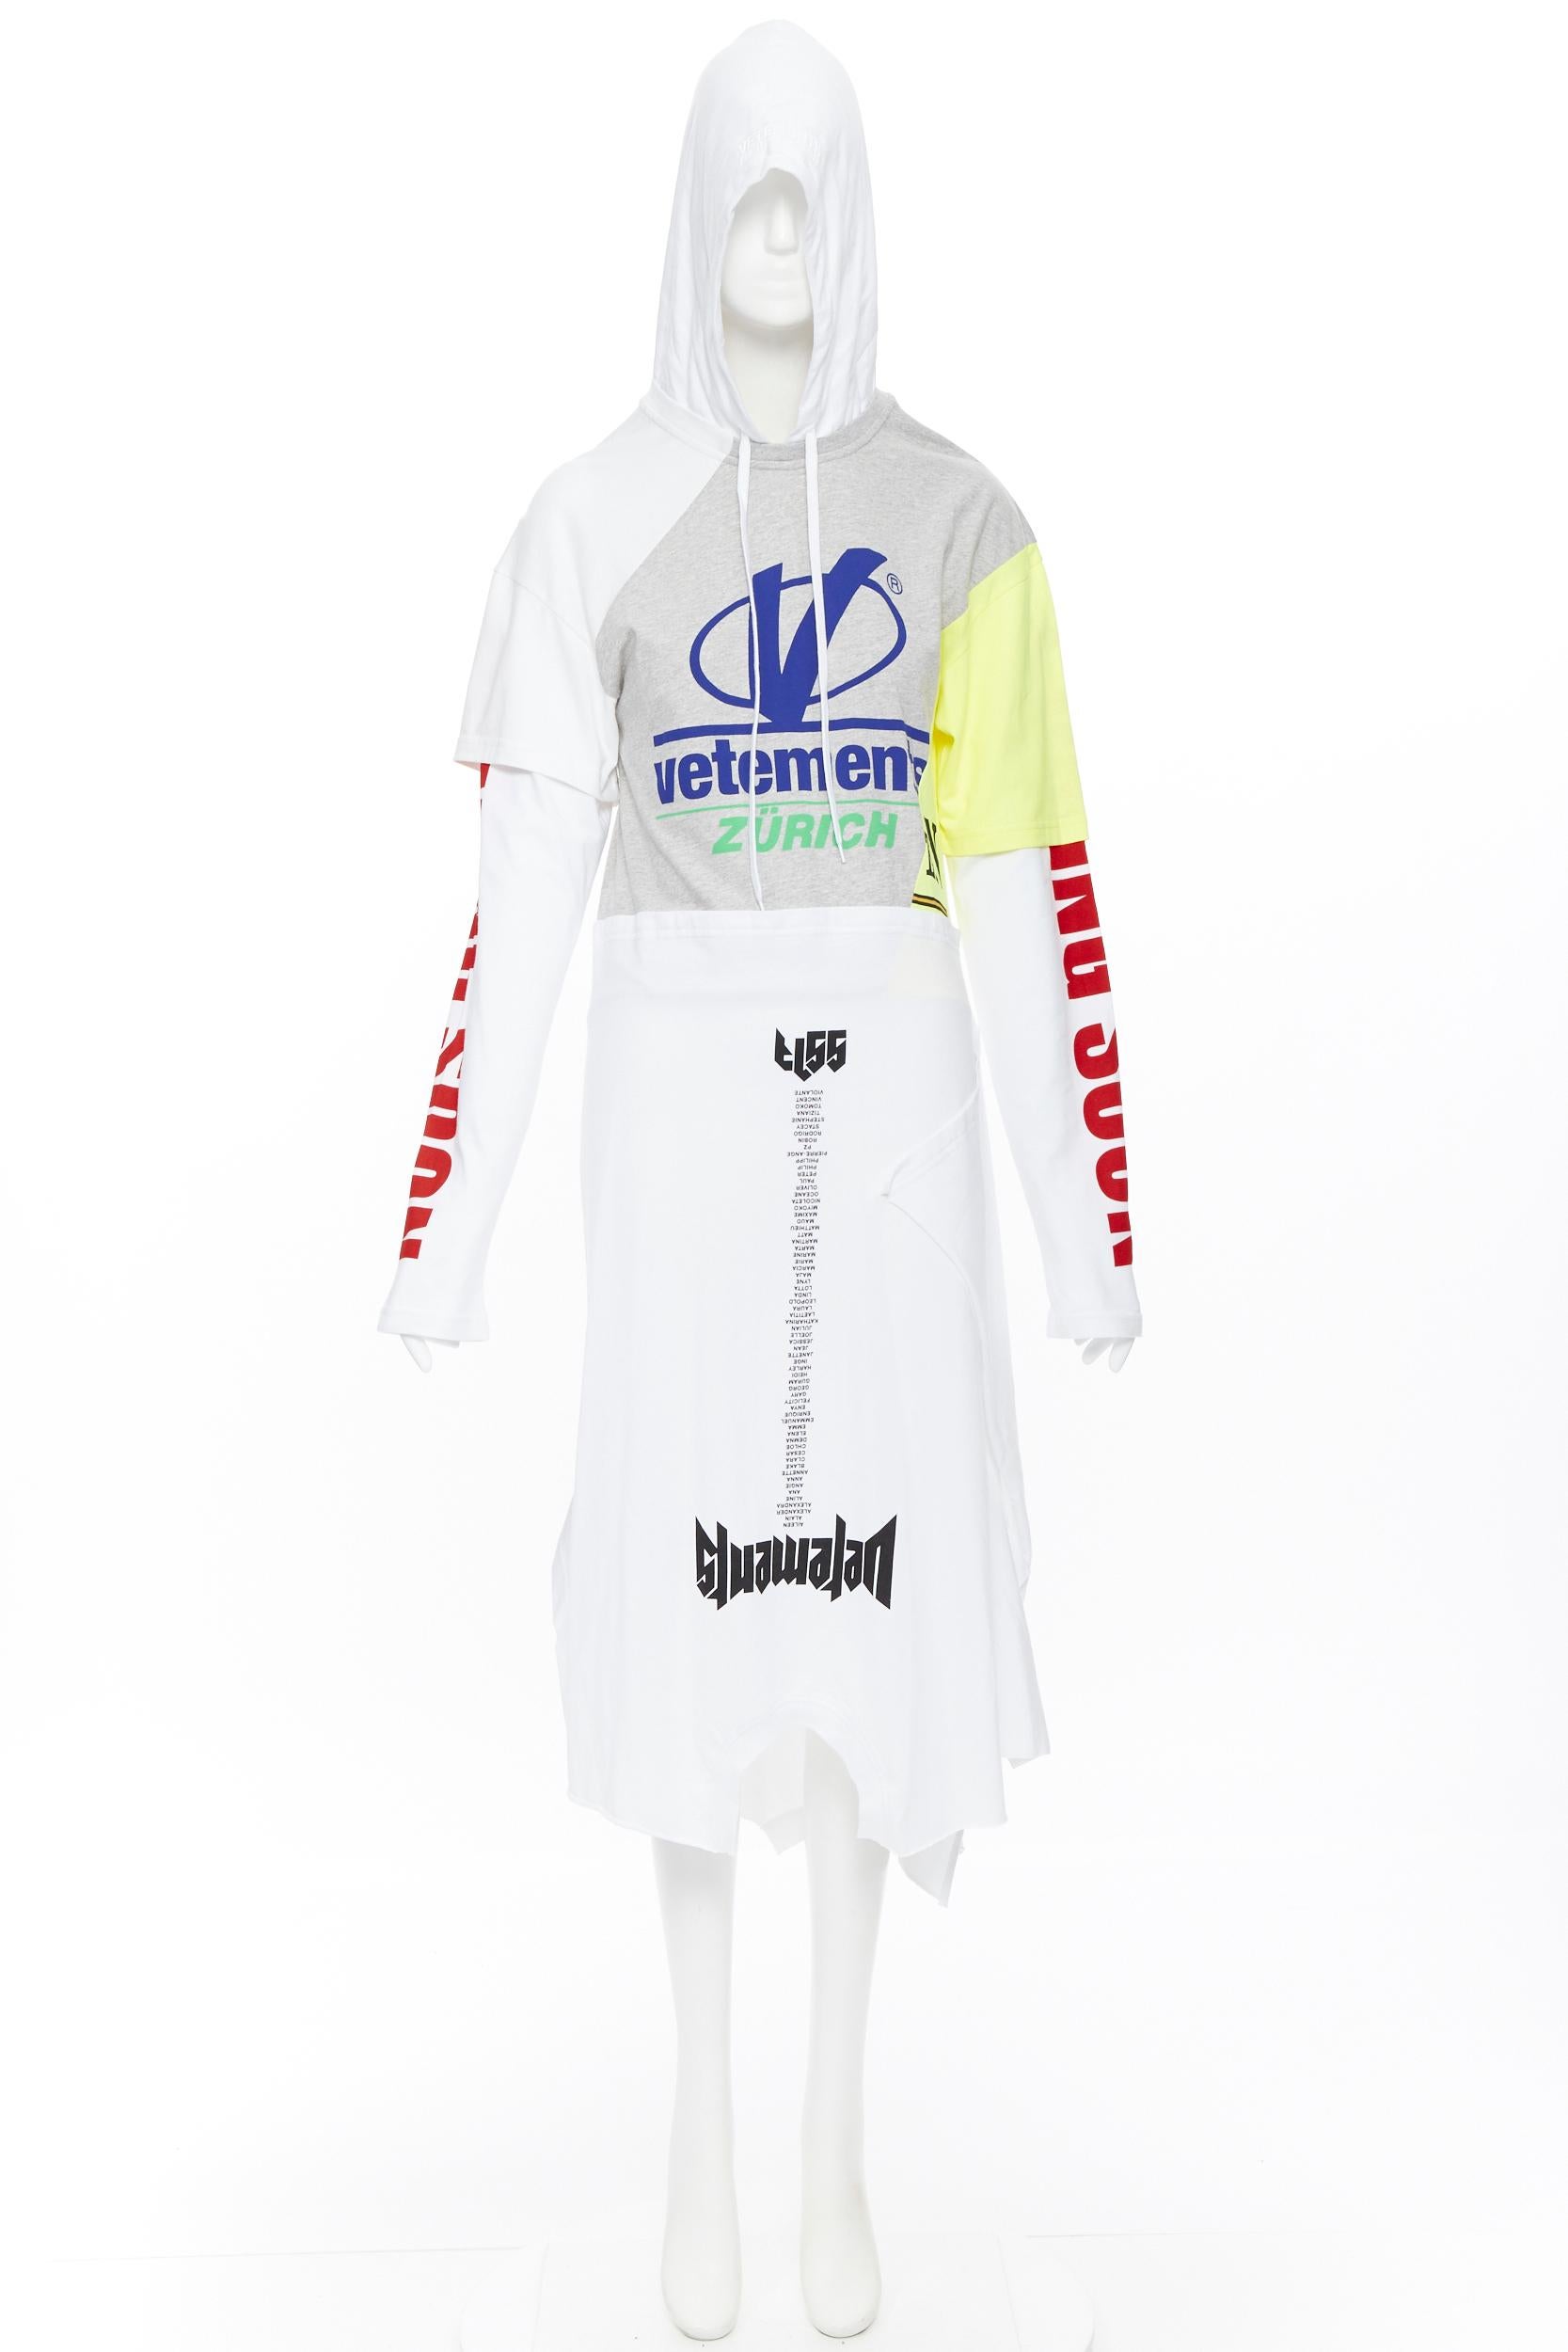 new VETEMENTS Demna Gvasalia white deconstructed band t-shirt hooded dress S 5